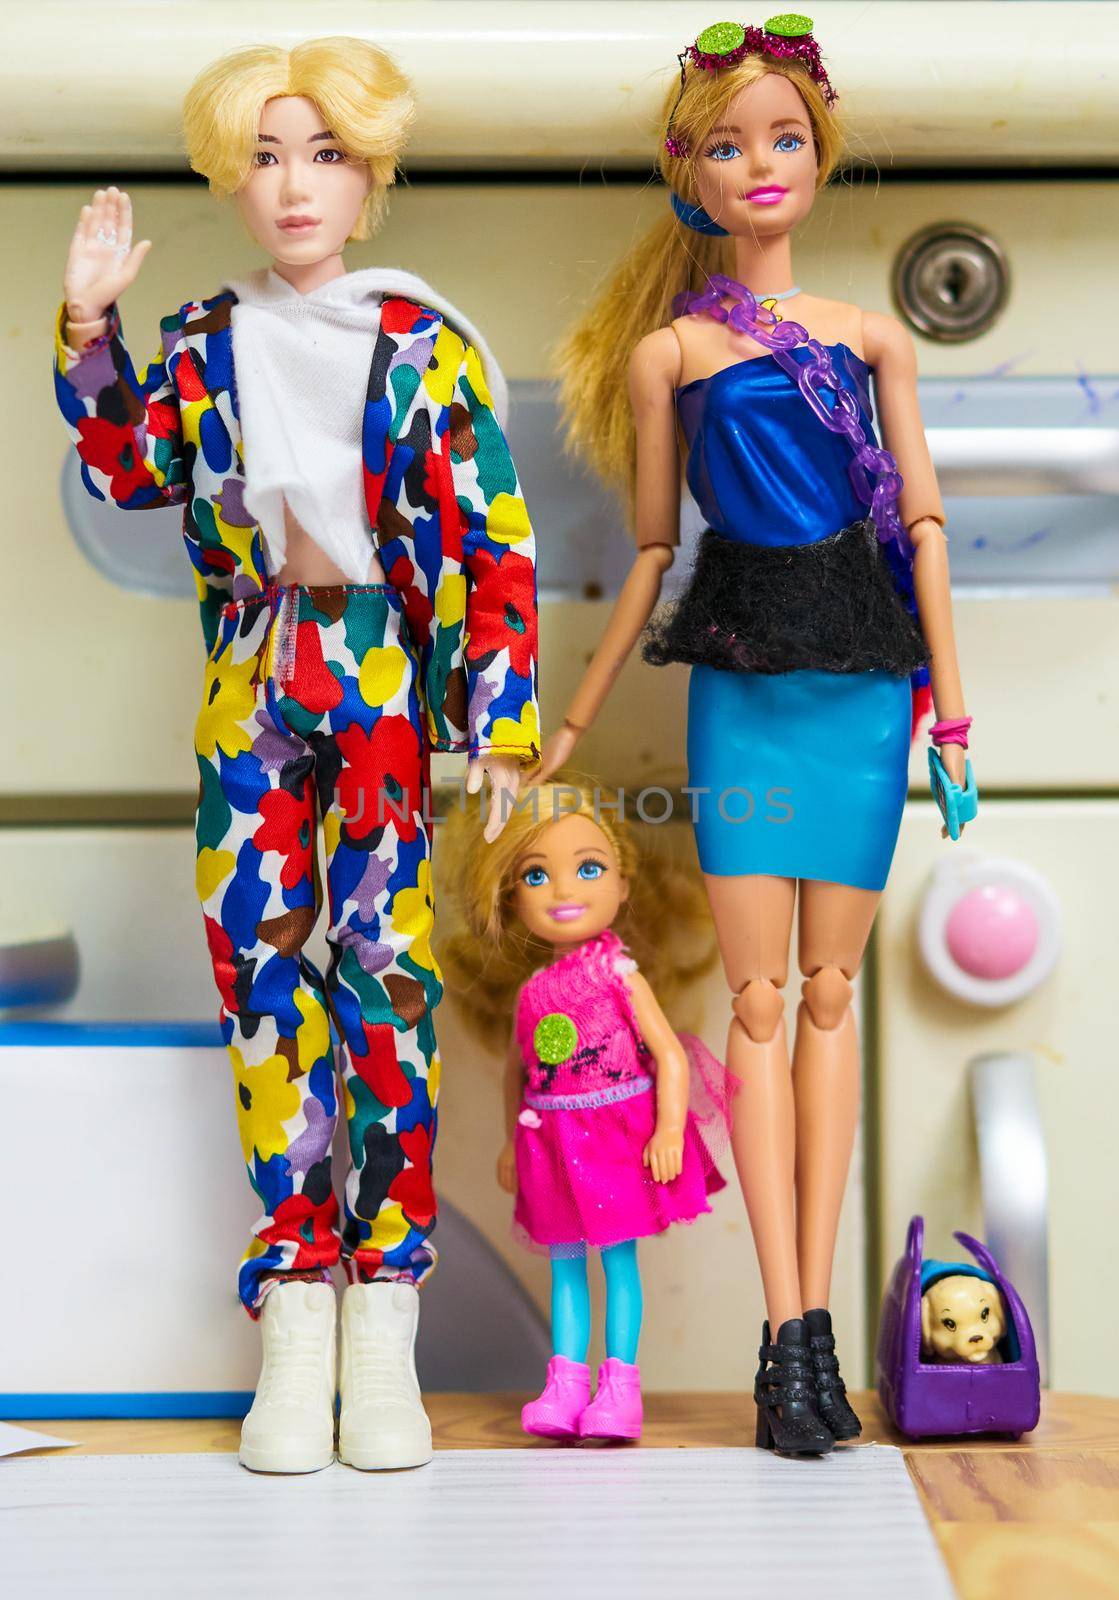 Bangkok,Thailand,Jan 6 2021-Barbie doll in family set